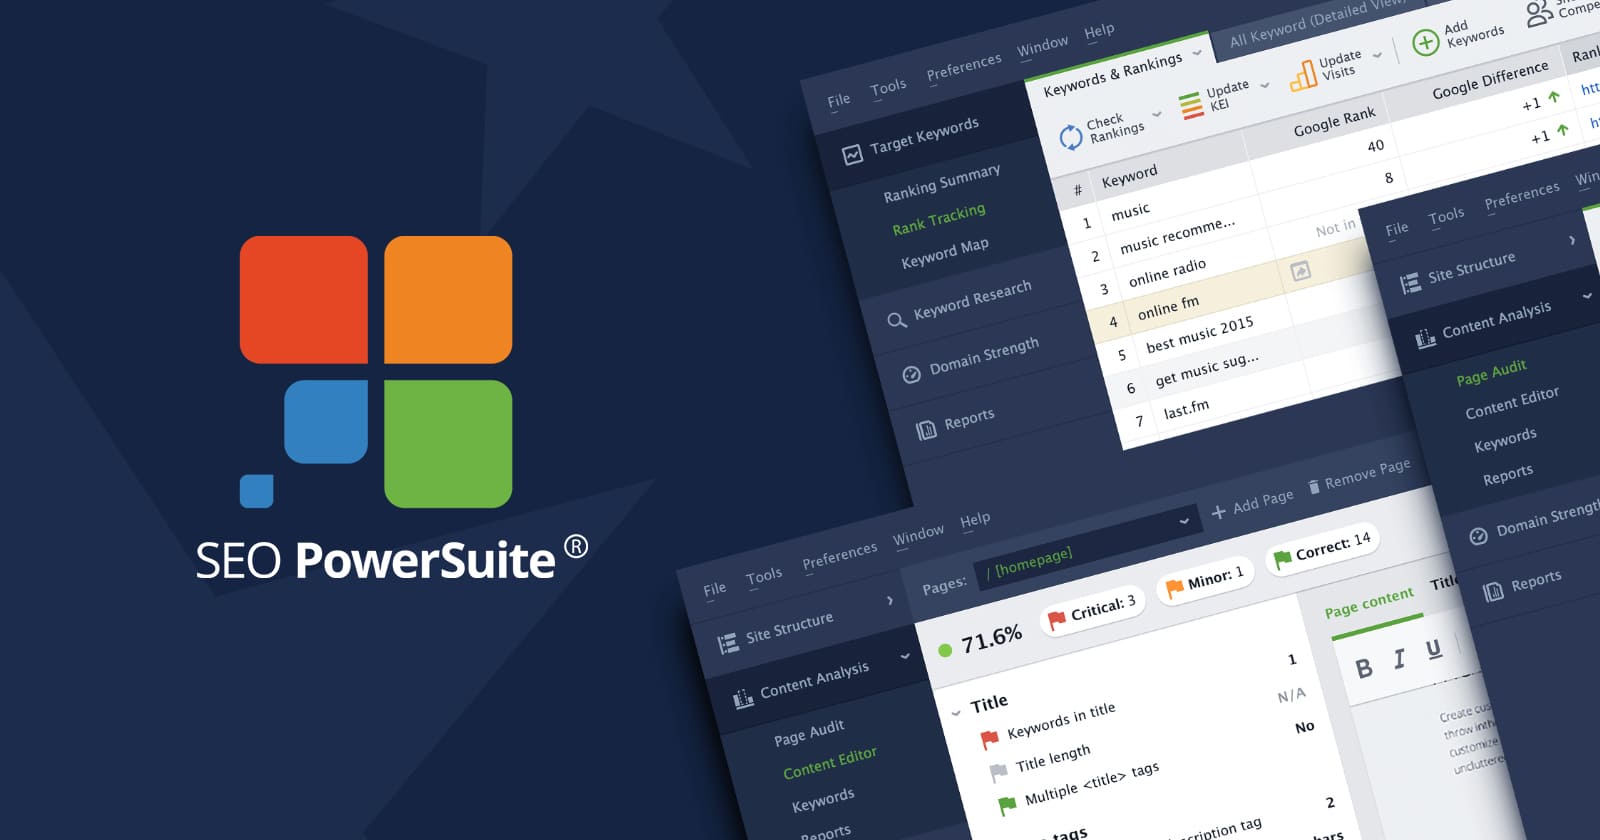 SEO PowerSuite as a spyfu alternatives